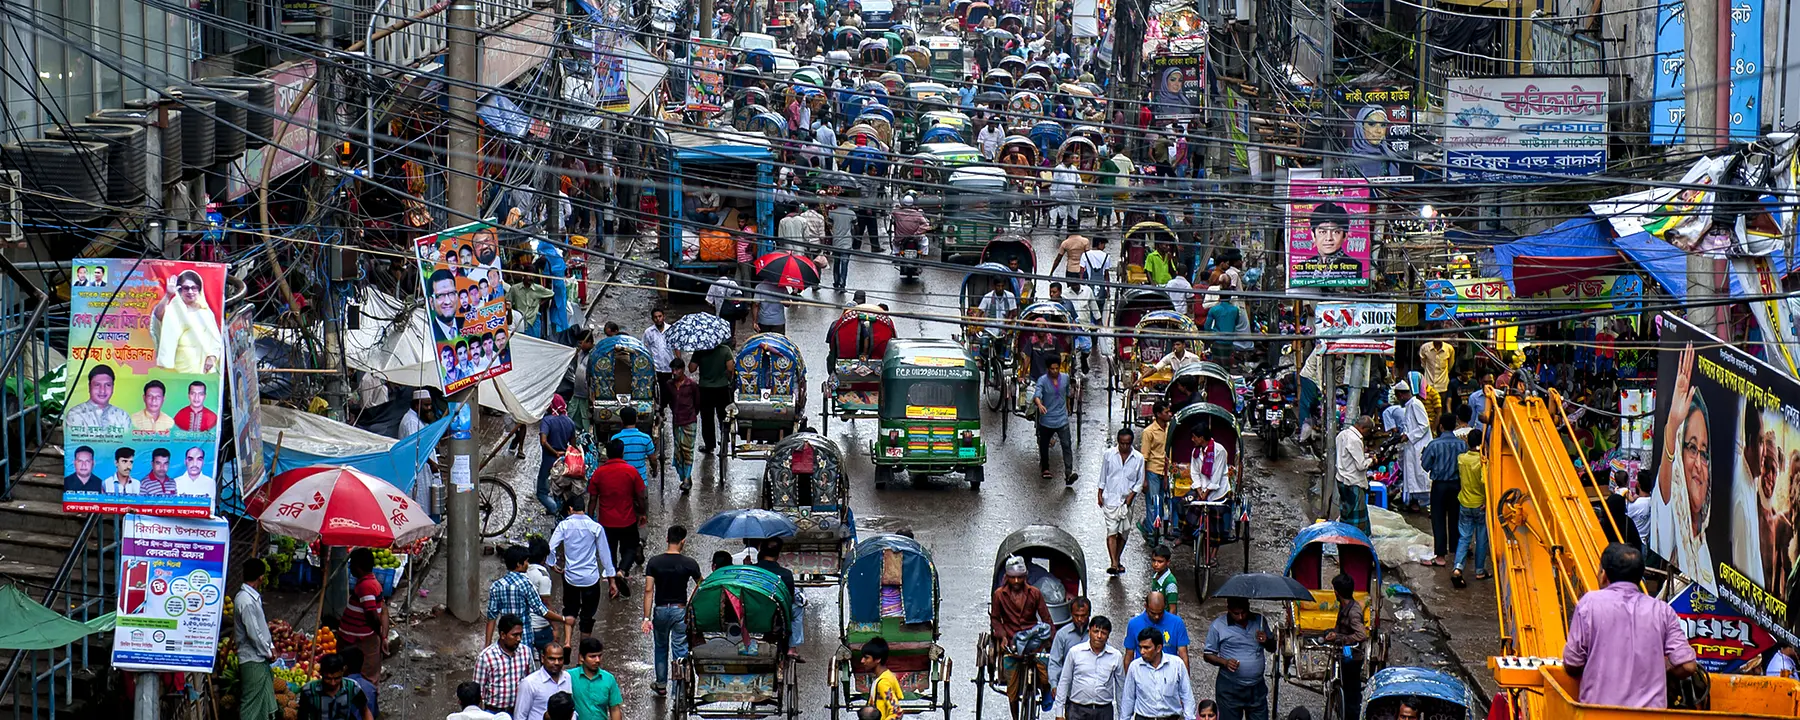 People walking in the street in Bangladesh